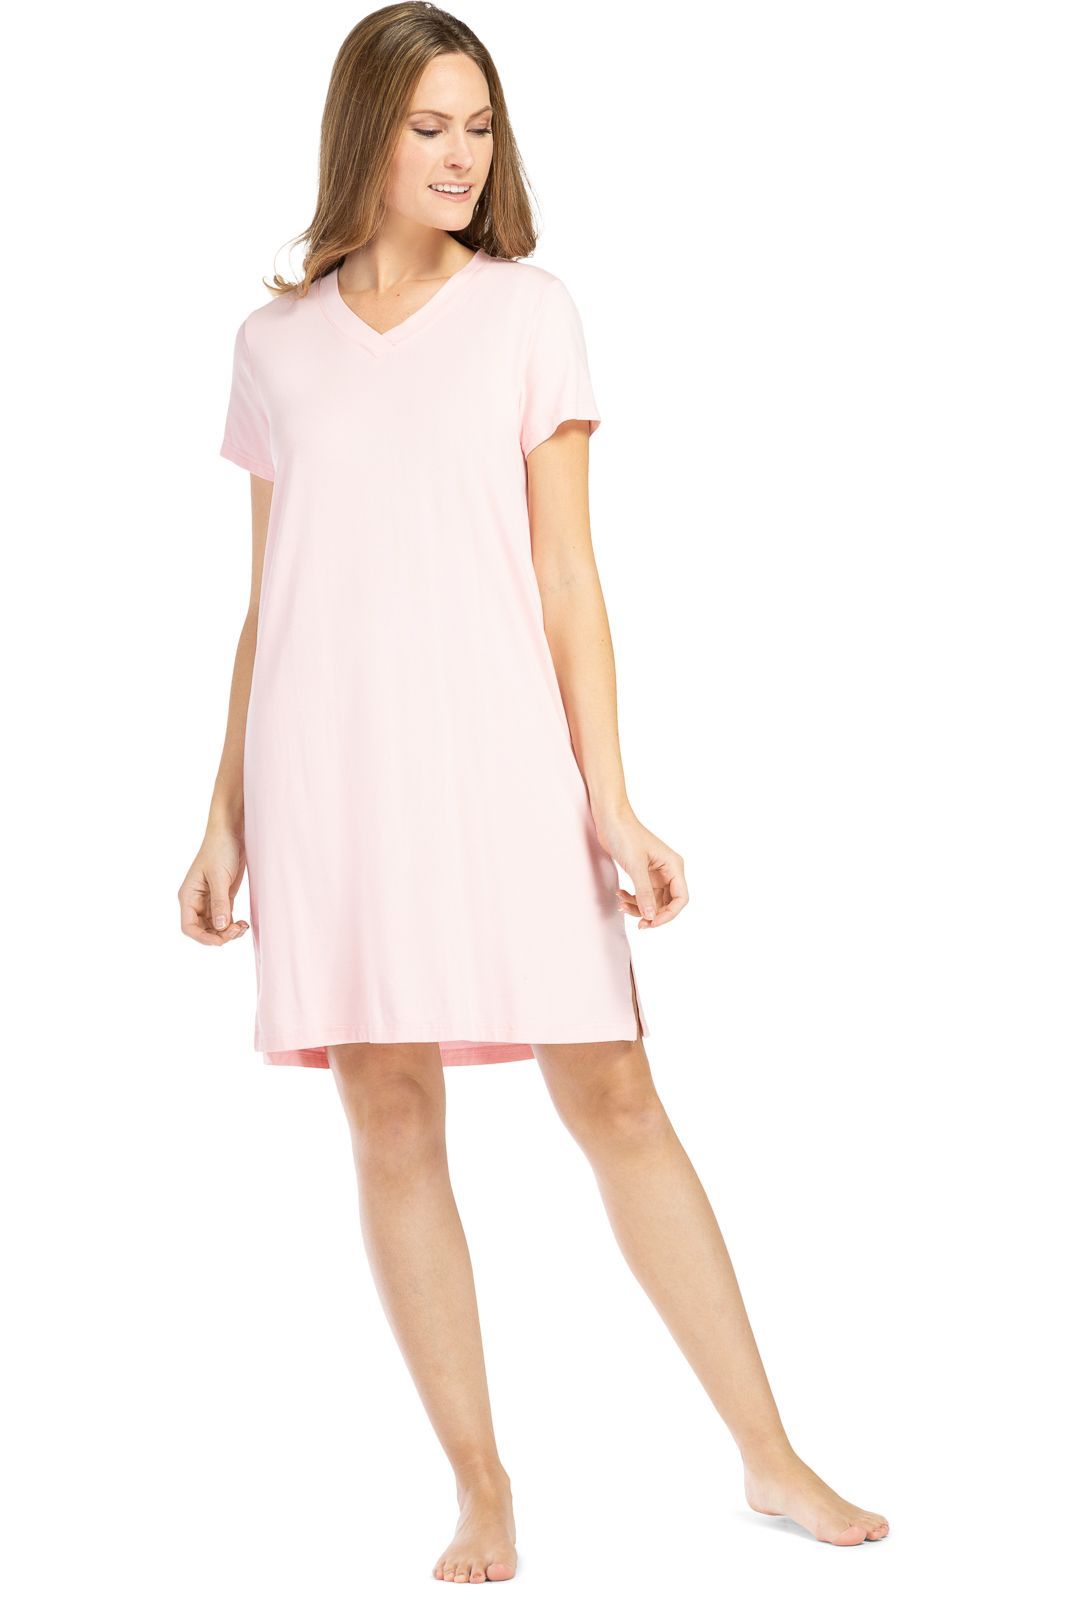 JWD Womens Sleepwear Short Sleeve Nightgown Soft Sleepshirt Pleated  Nightshirt Scoopneck Casual - FP-Pink Star / S